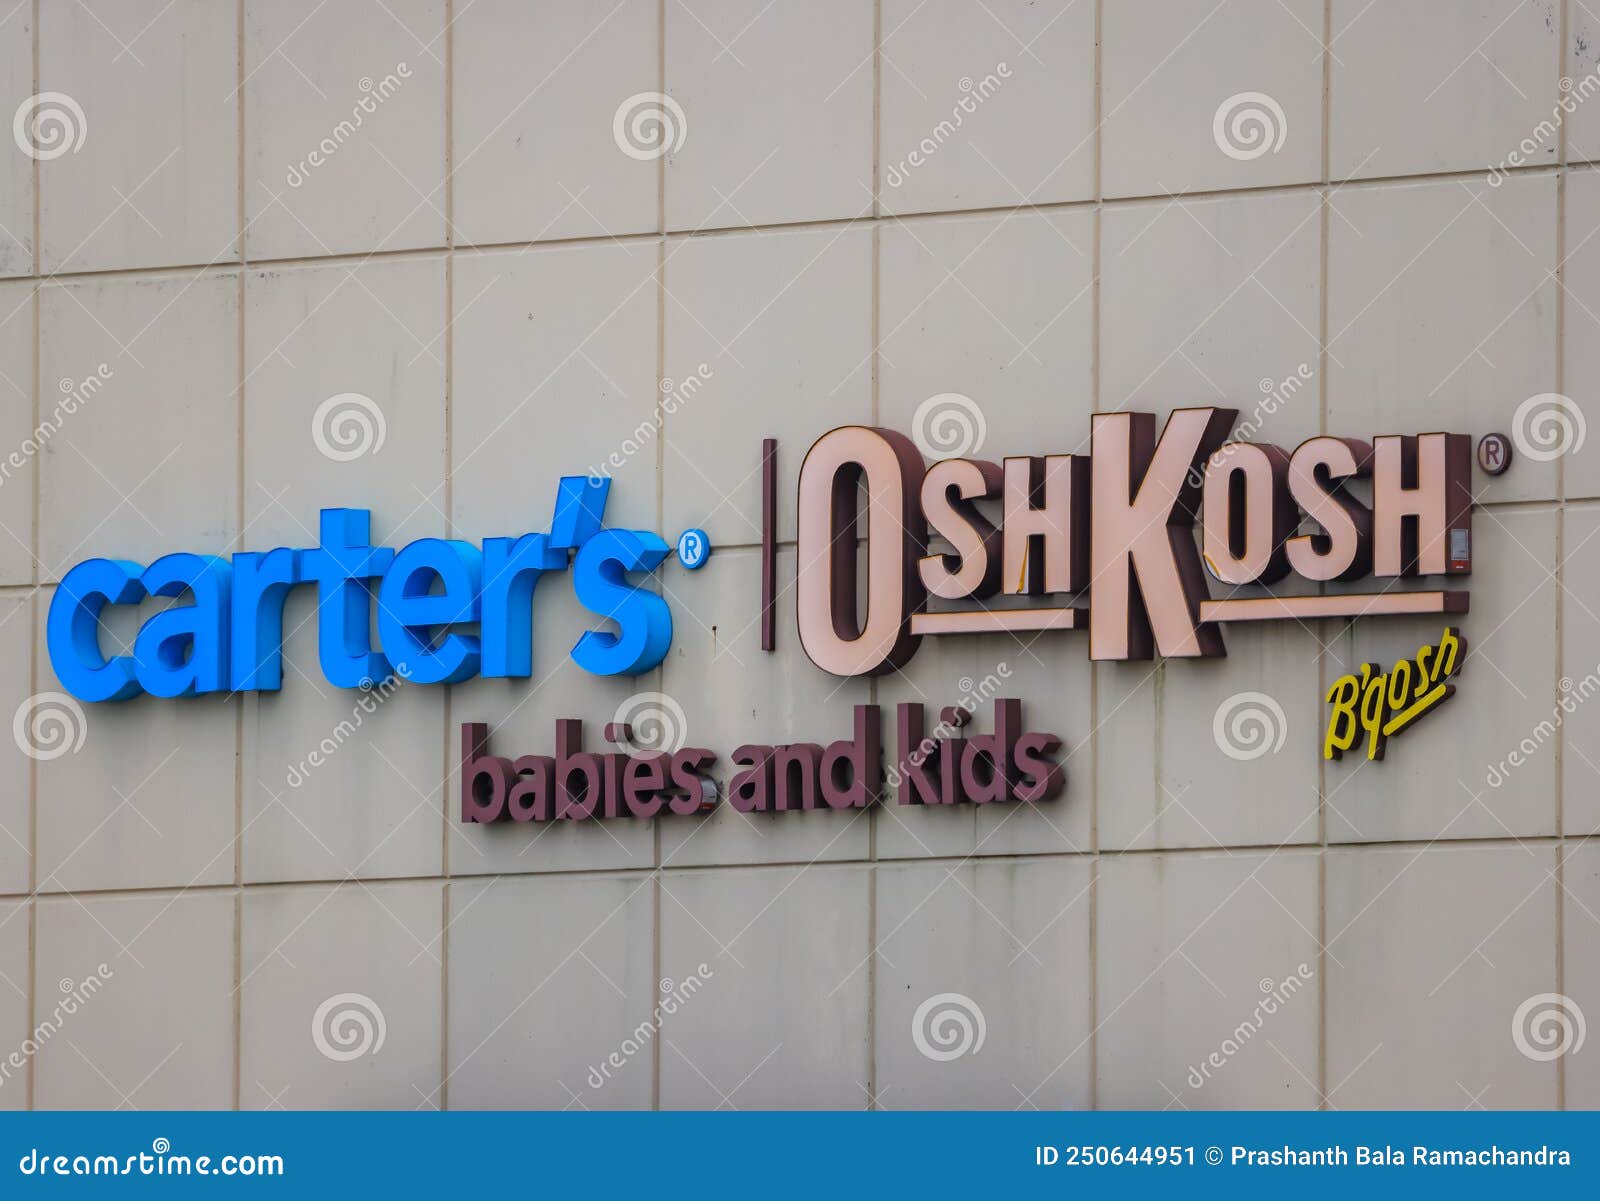 Carters OSH KOSH Storefront. Carters OSH KOSH is a Baby, Kids and